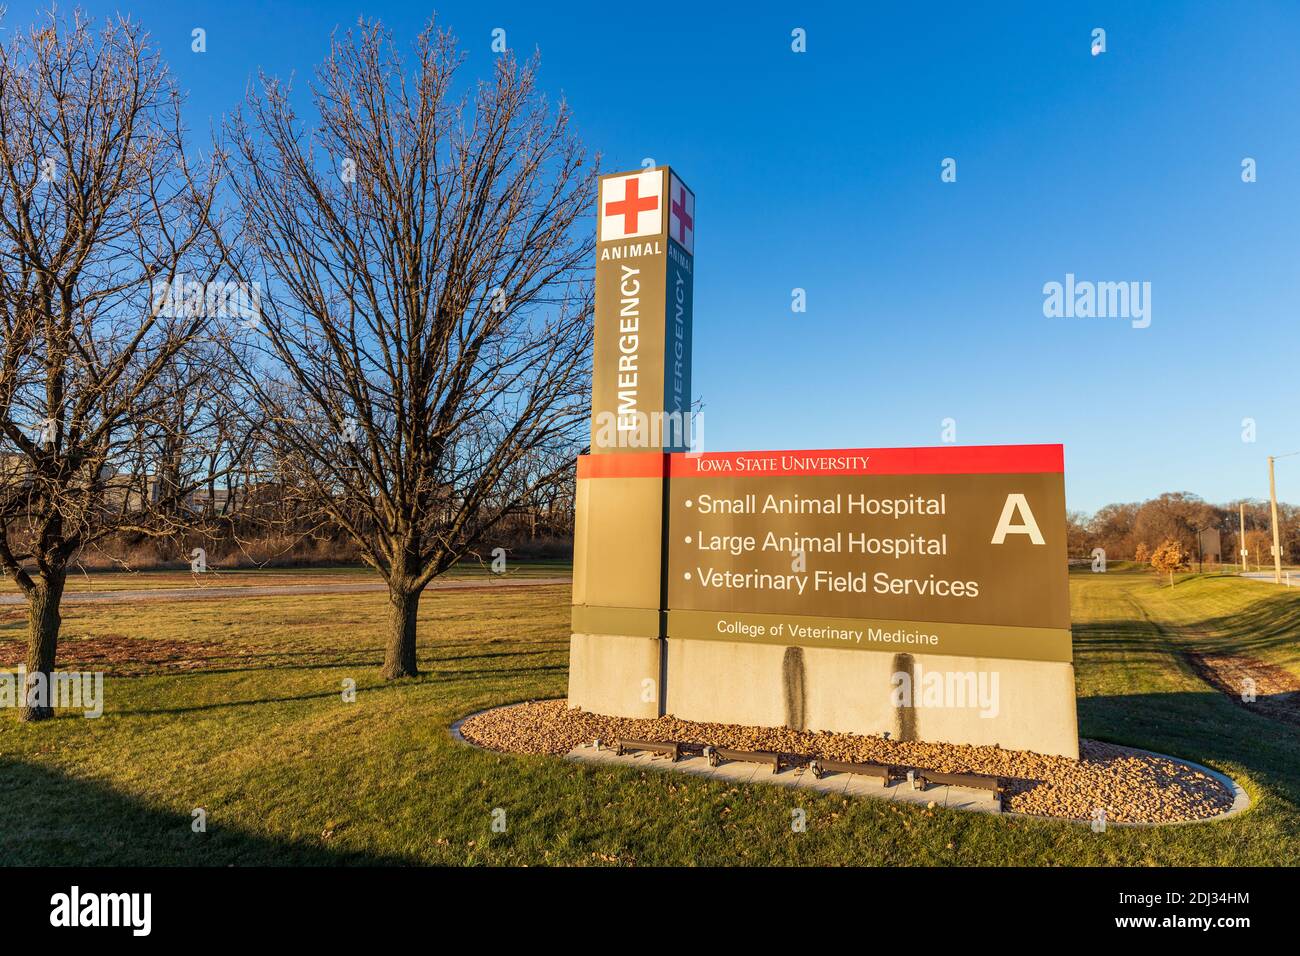 Ames Ia Usa December 4 2020 Iowa State University College Of Veterinary Medicine Animal Emergency Entrance 2DJ34HM 